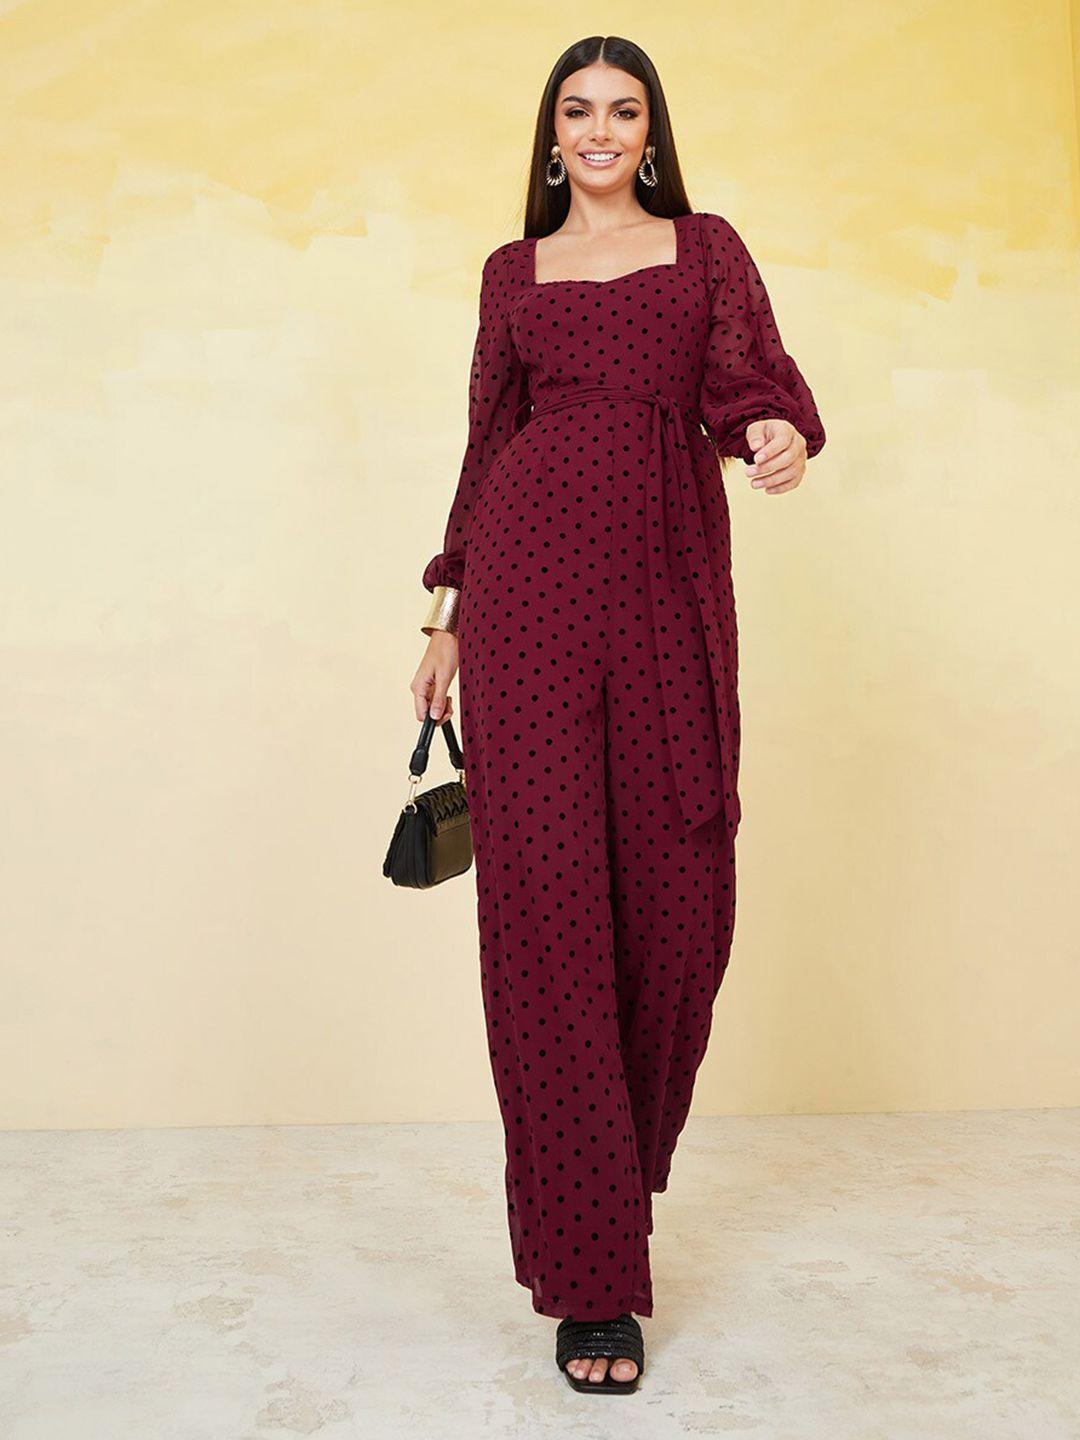 styli-burgundy-&-black-polka-dots-printed-basic-jumpsuit